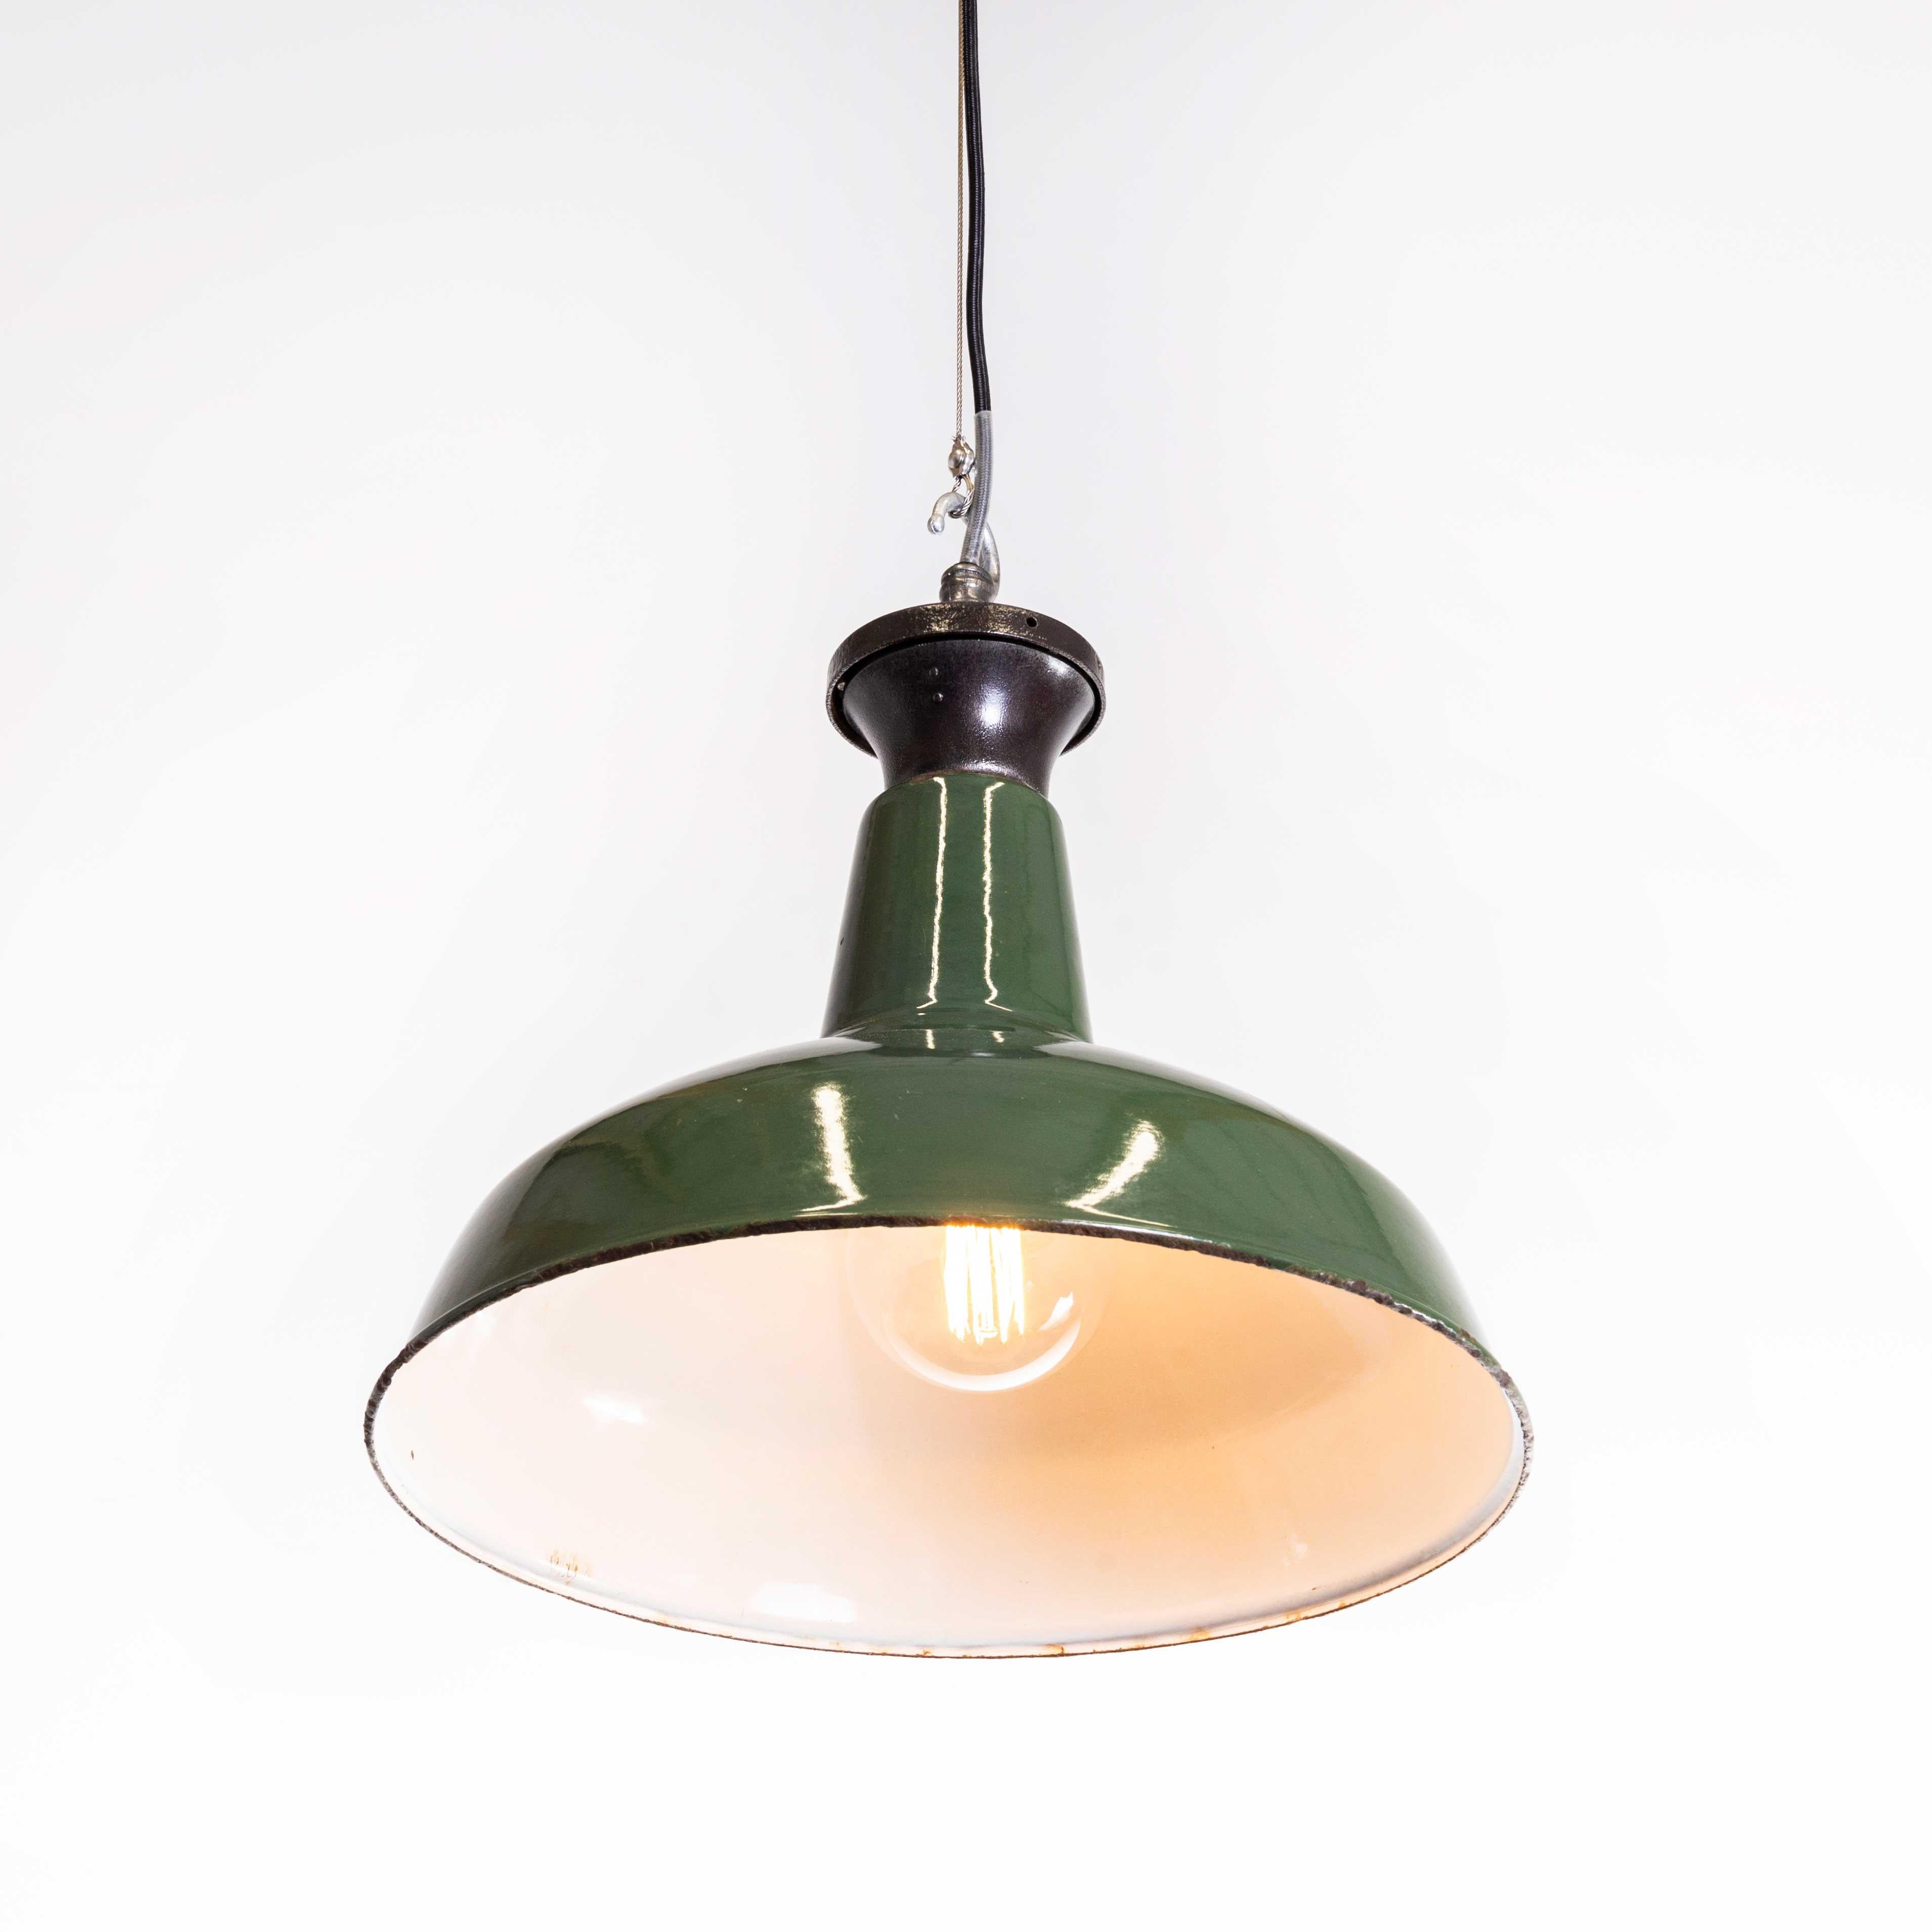 1940's Real Industrial Enamel Green Single Pendant Lamp - 16 Inch 7